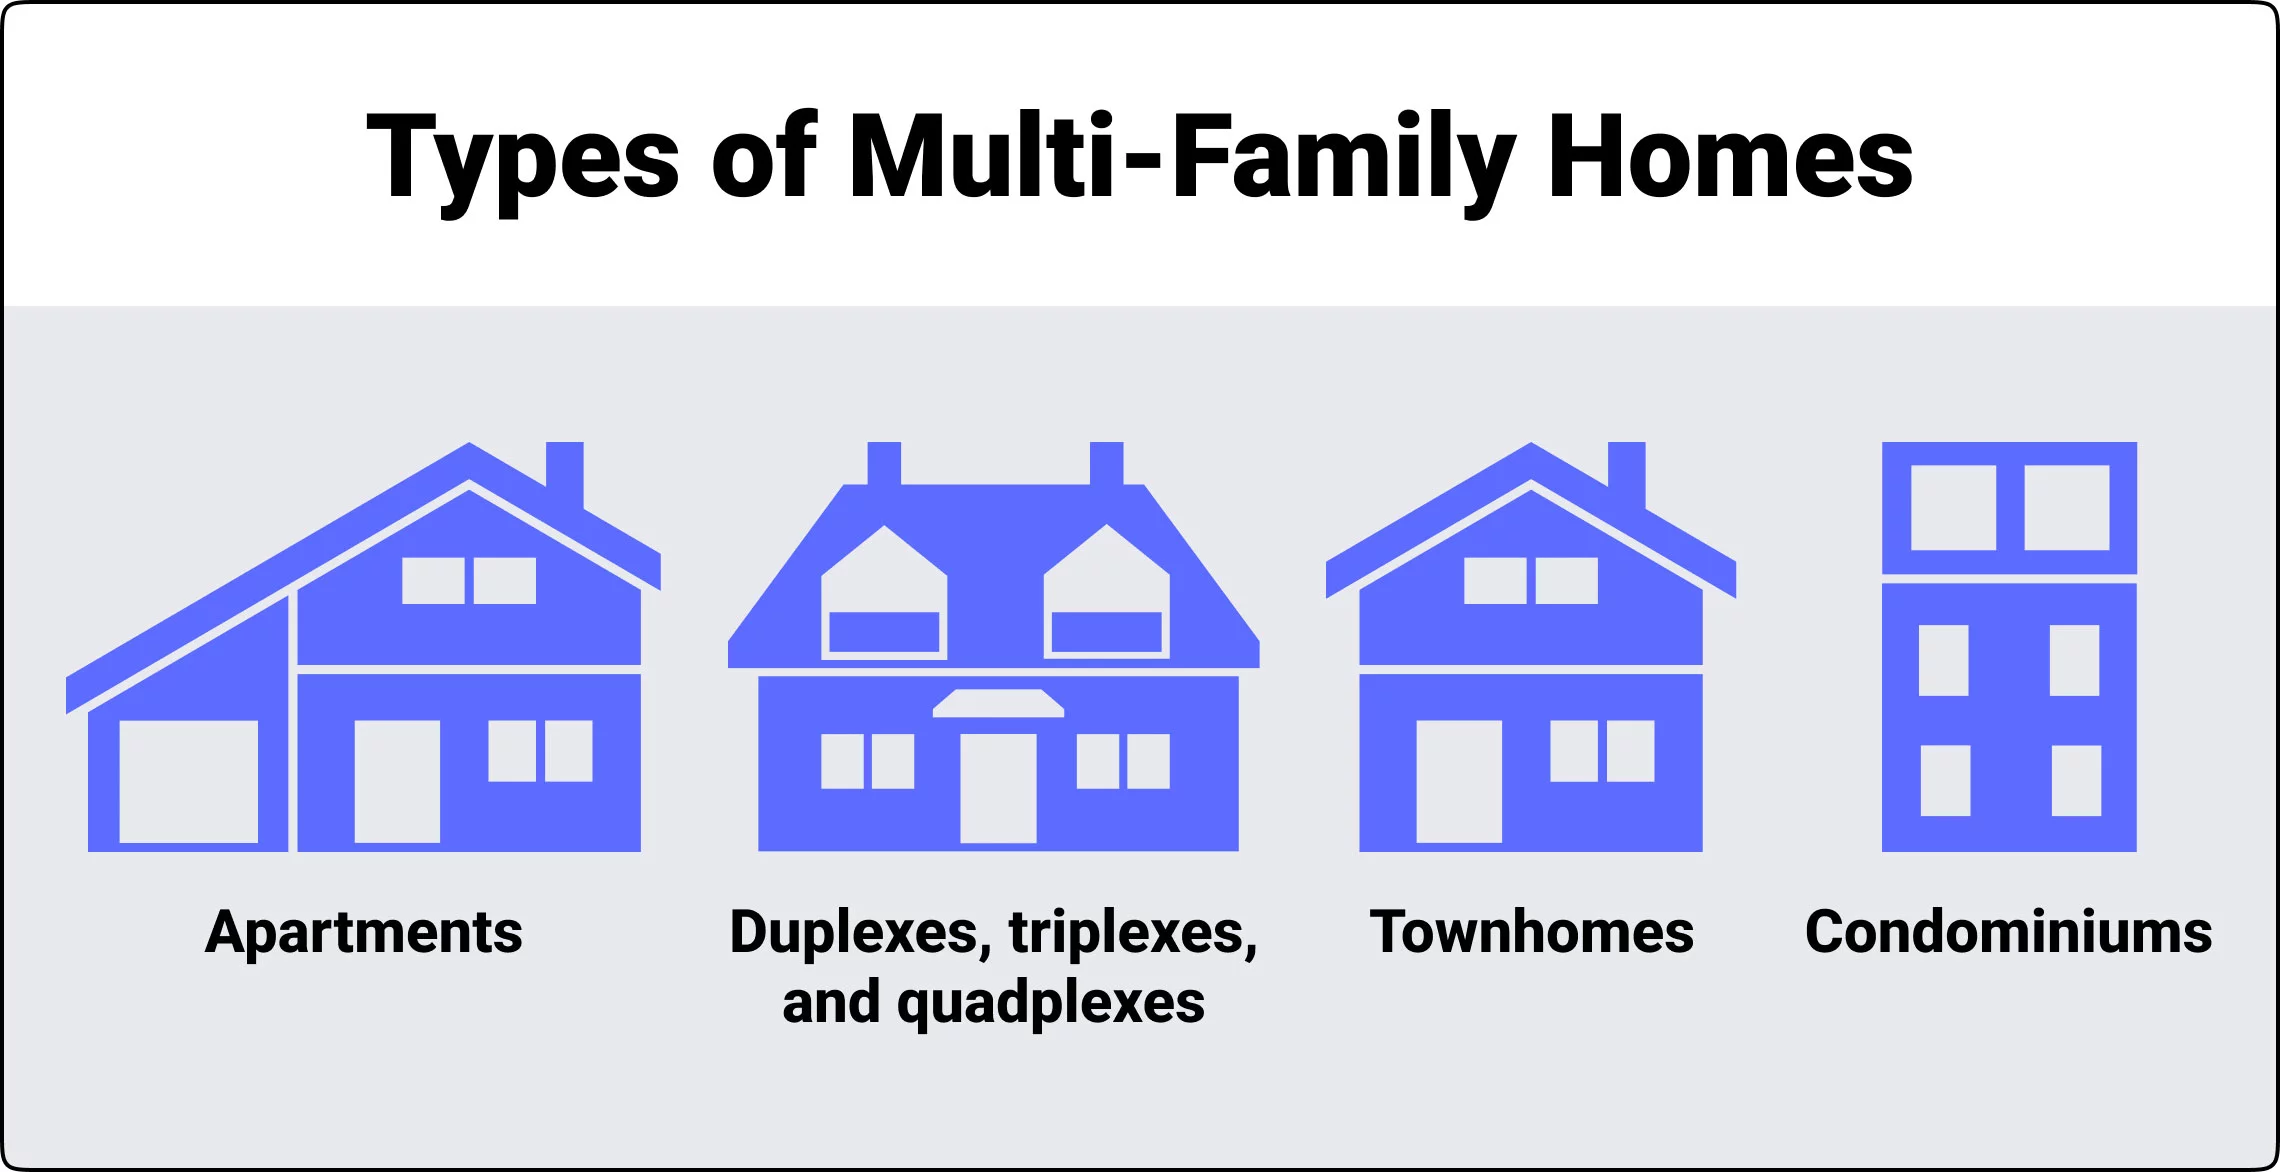 Types of multi-family homes